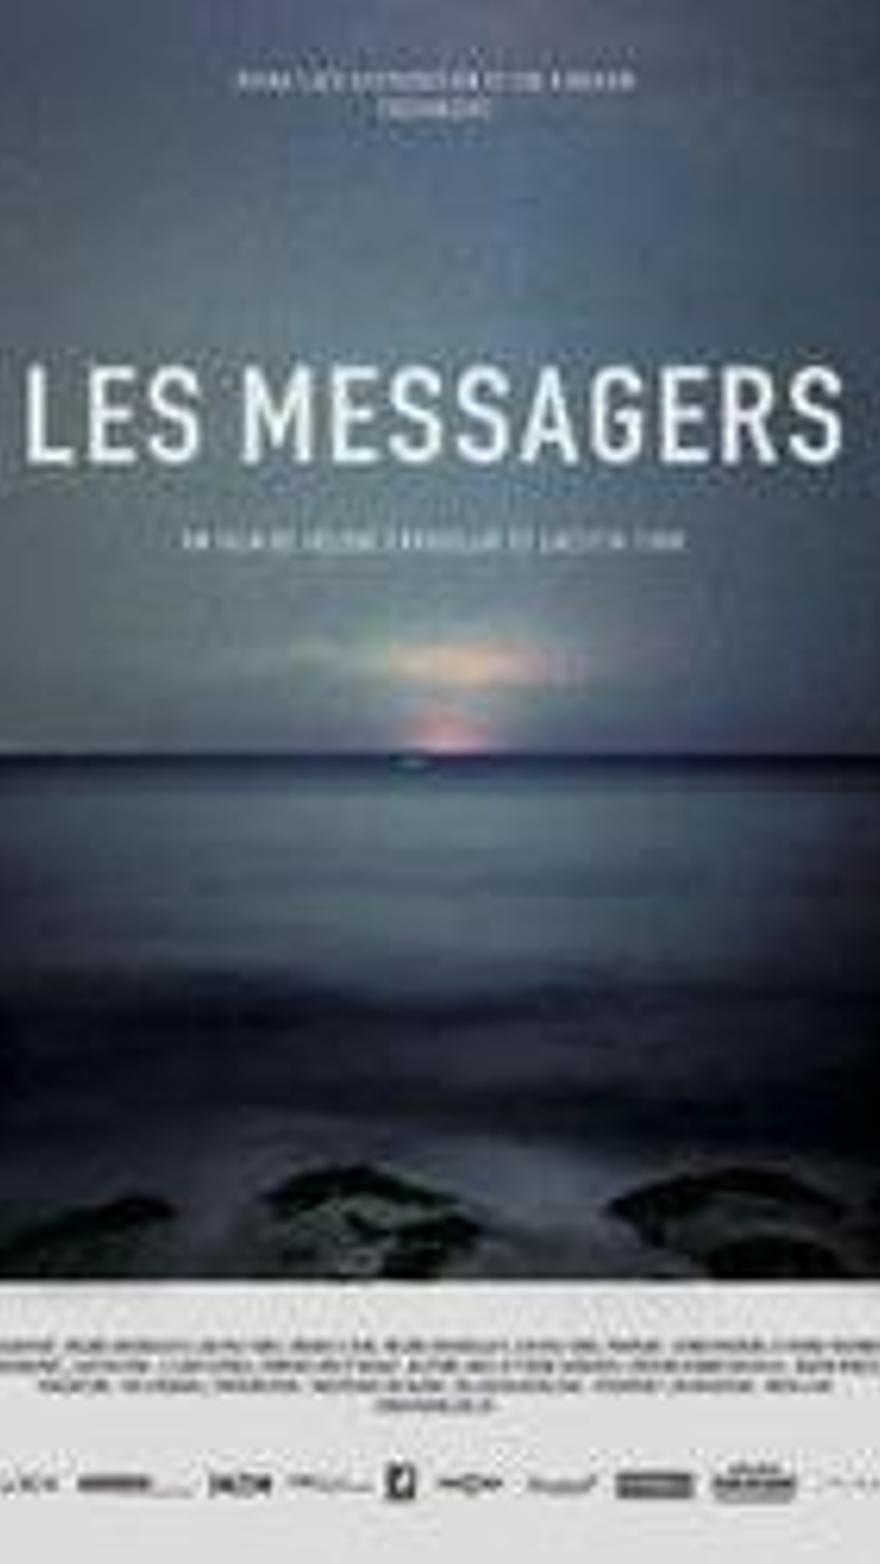 Les Messagers (Los mensajeros)